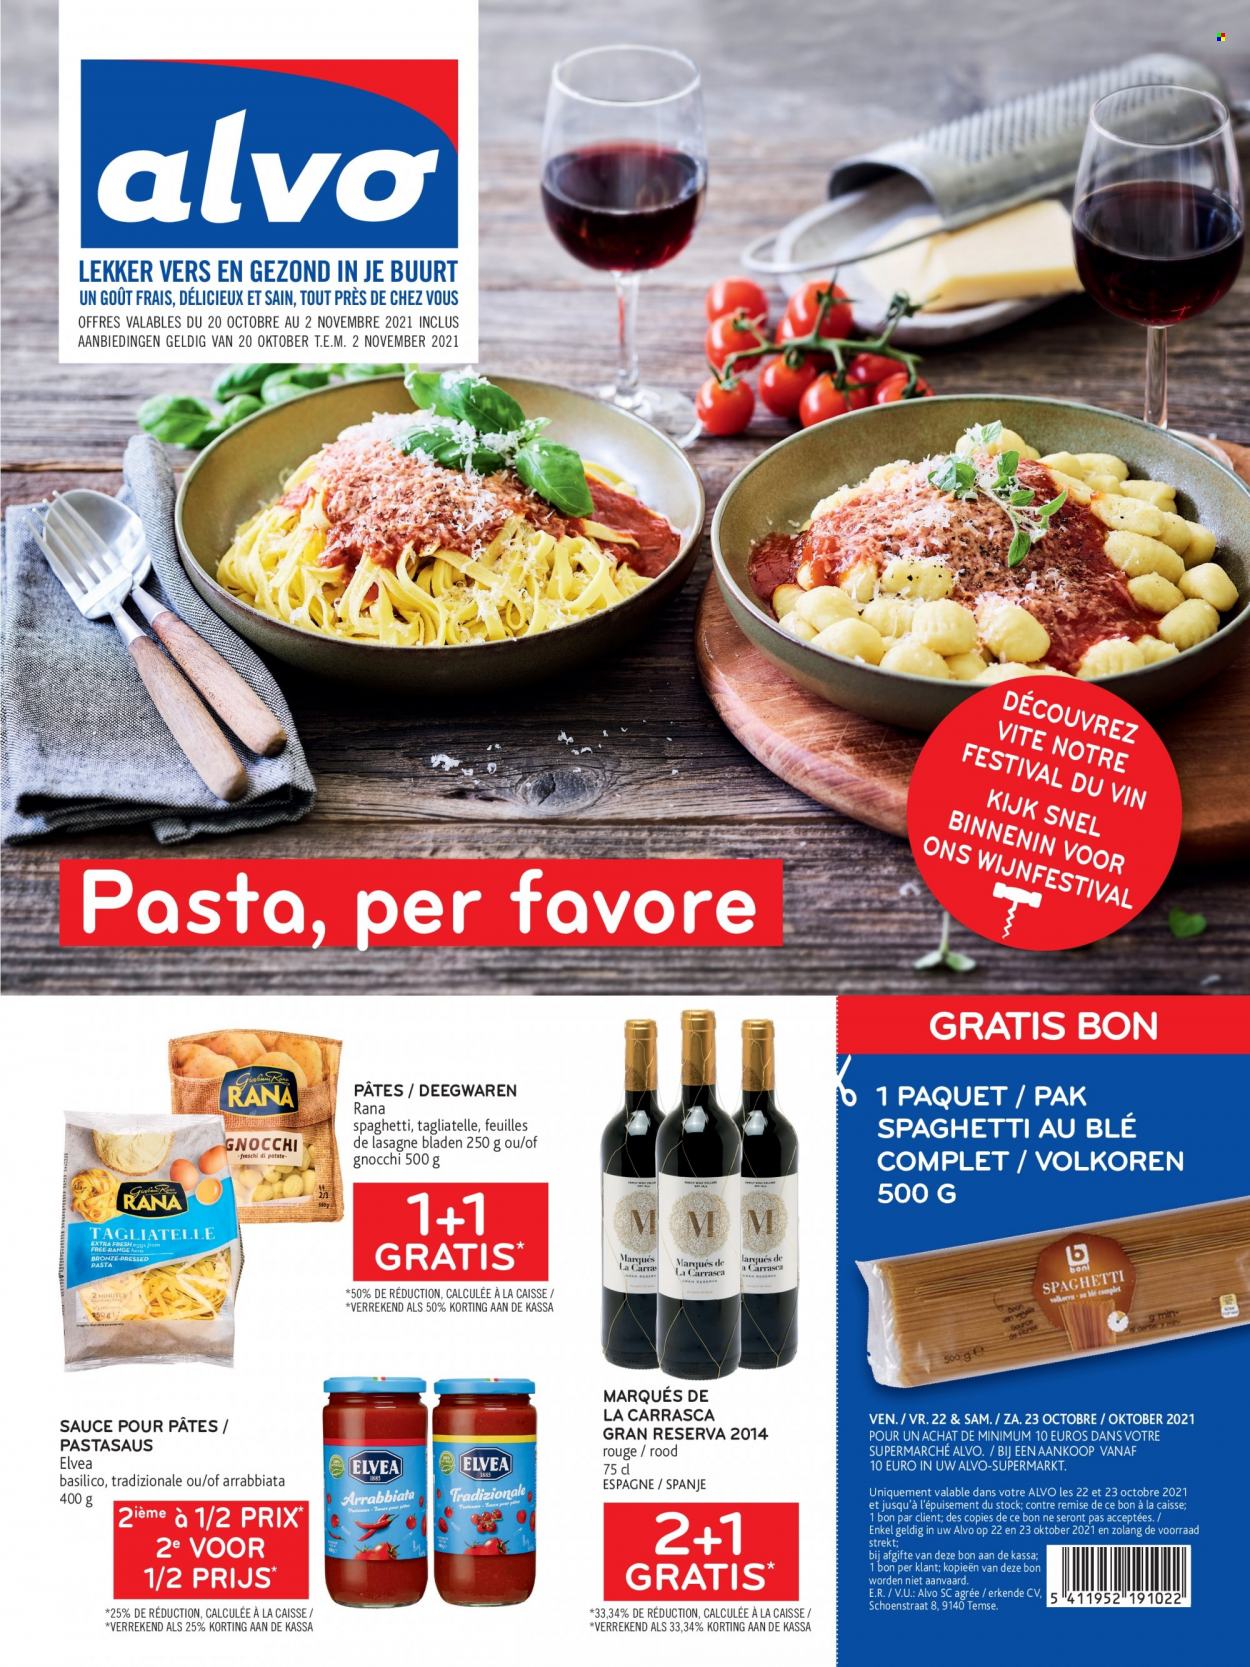 thumbnail - Alvo-aanbieding - 20/10/2021 - 02/11/2021 -  producten in de aanbieding - lasagne, gnocchi, pasta, spaghetti, tagliatelle, wijn. Pagina 1.